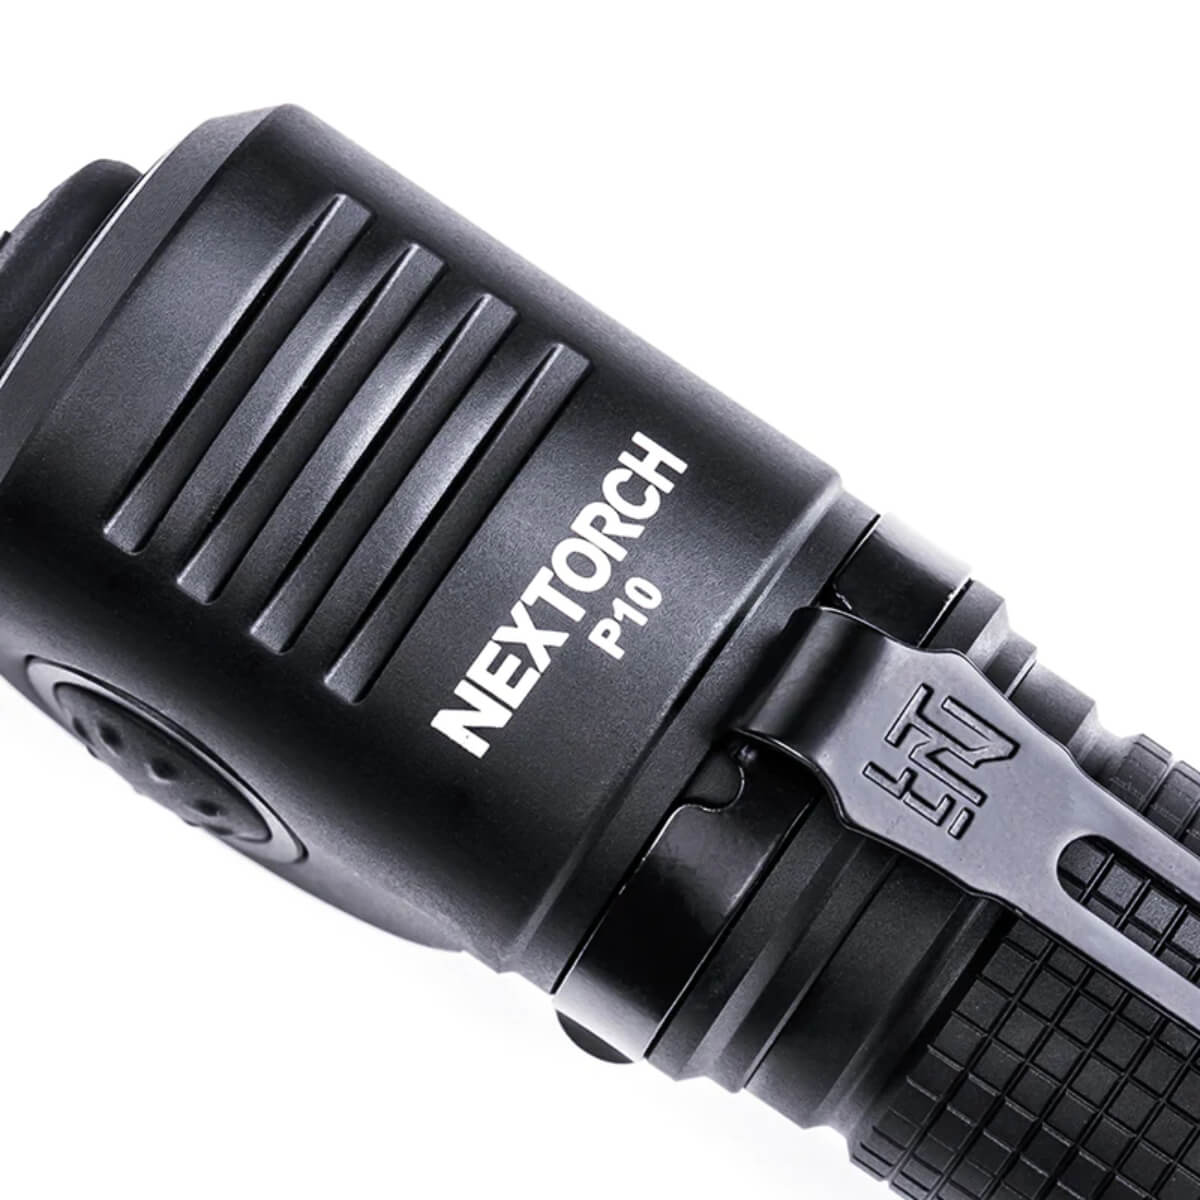 Nextorch P10 Right Angle Flashlight